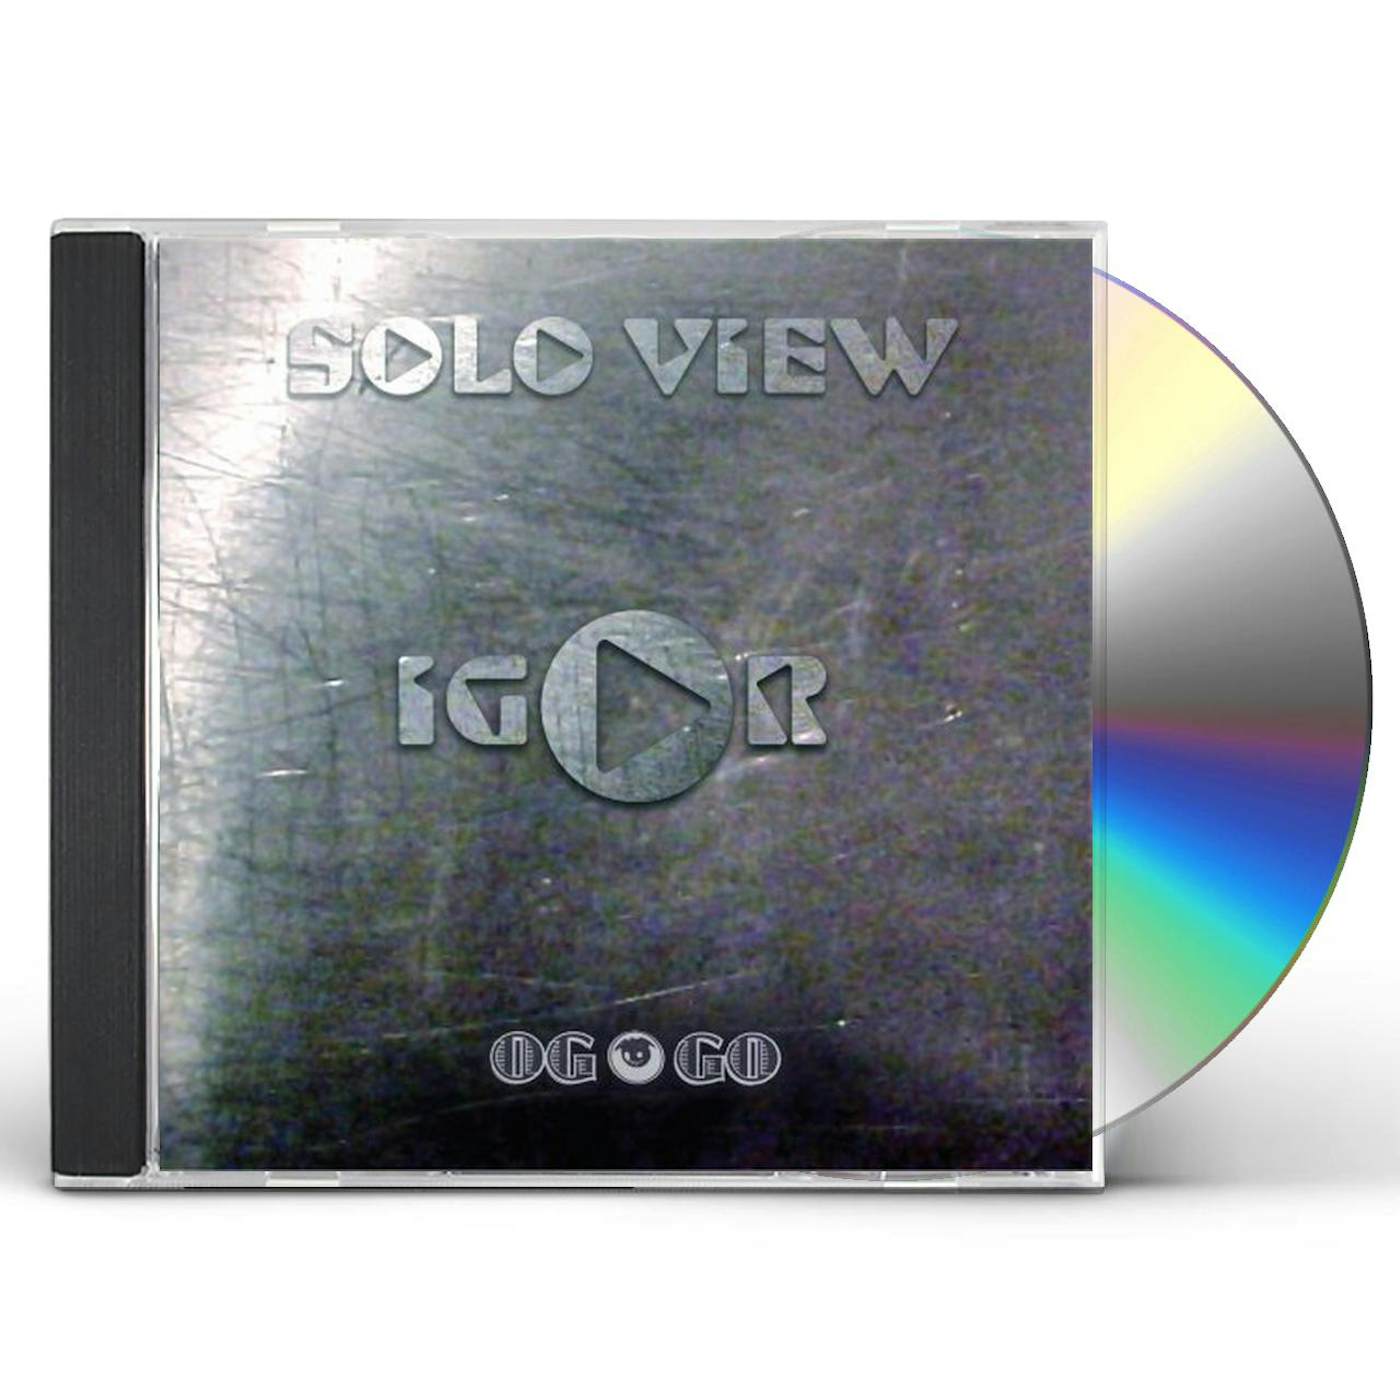 IGOR CD